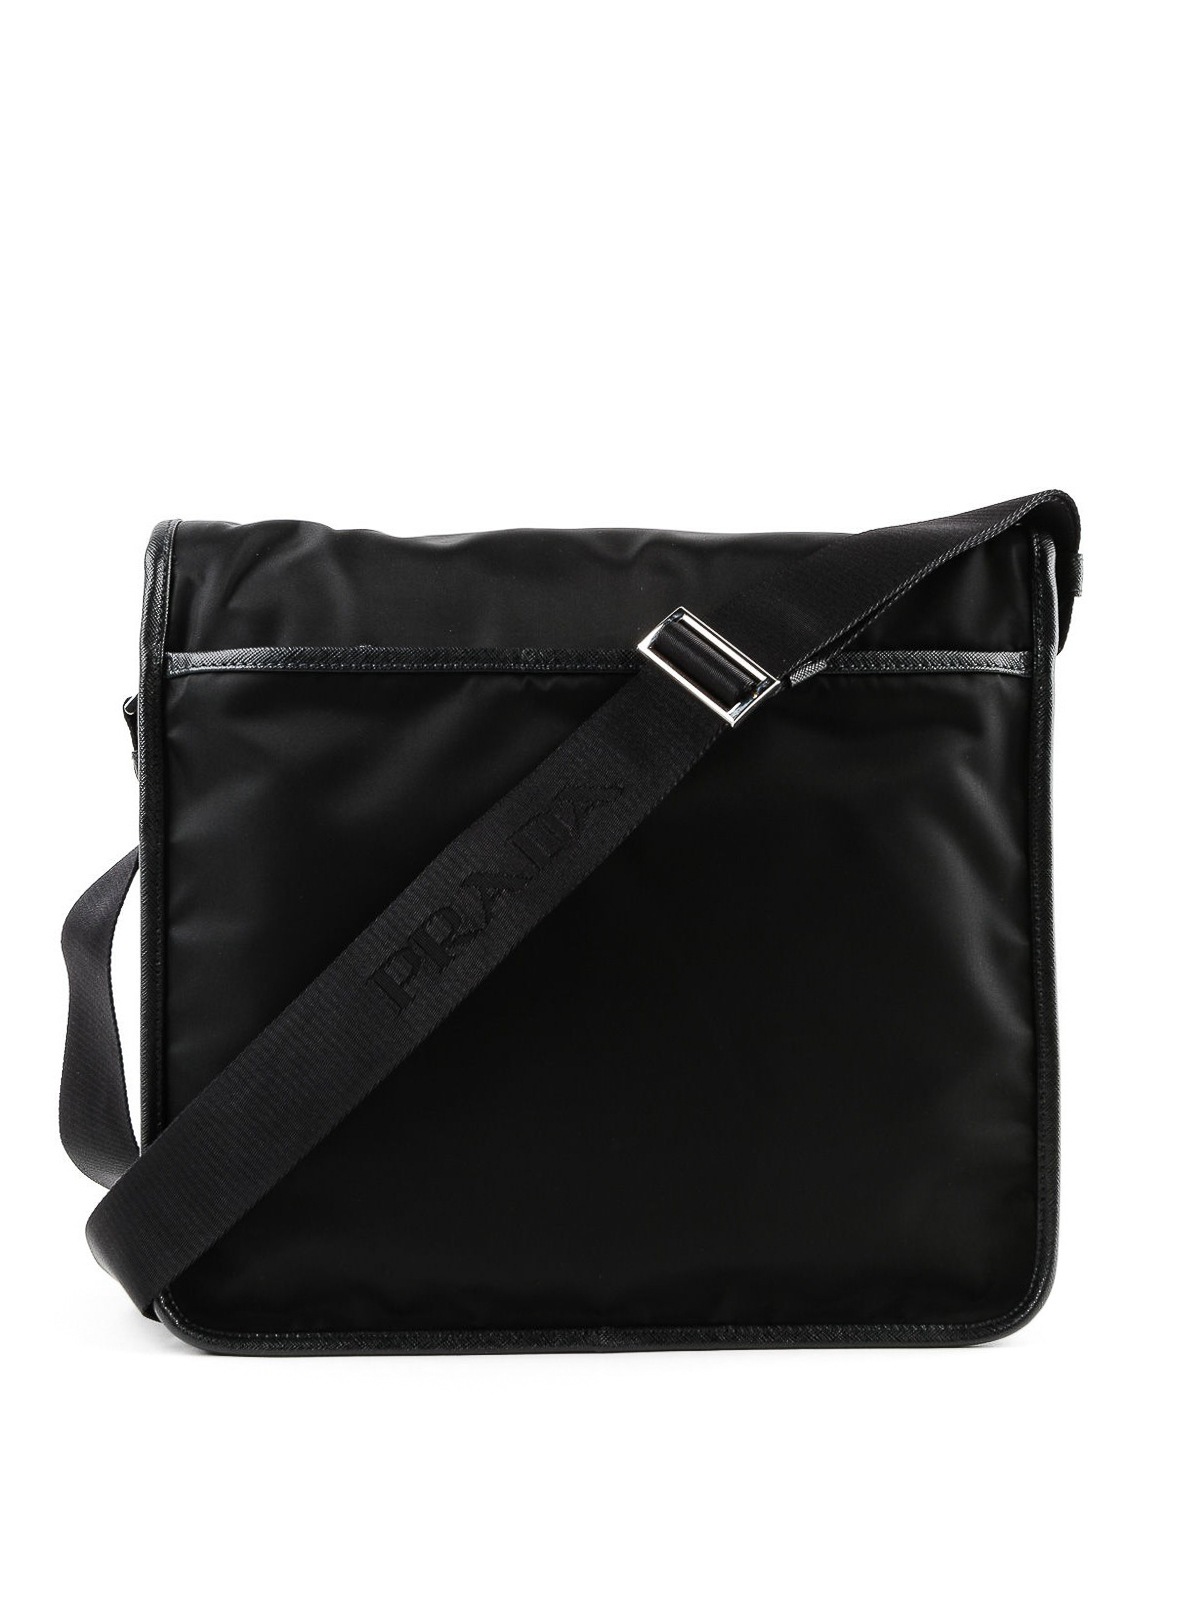 Prada Sling Leather Cross-body Bag in Black for Men